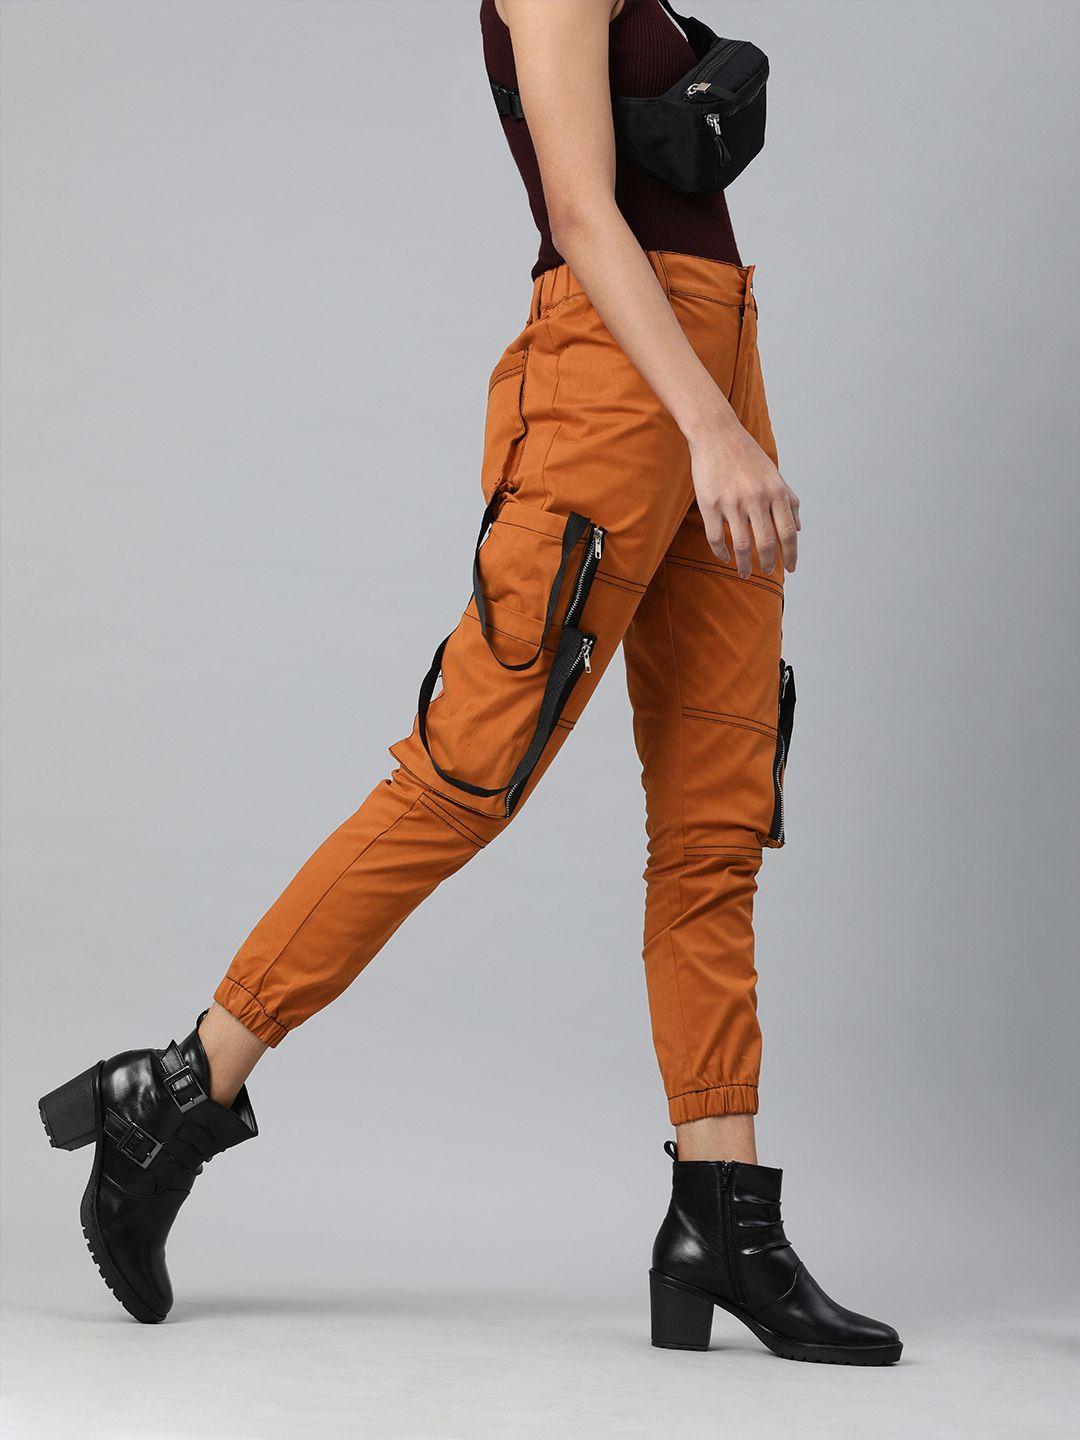 kassually-women-rust-orange-slim-fit-solid-cargo-joggers